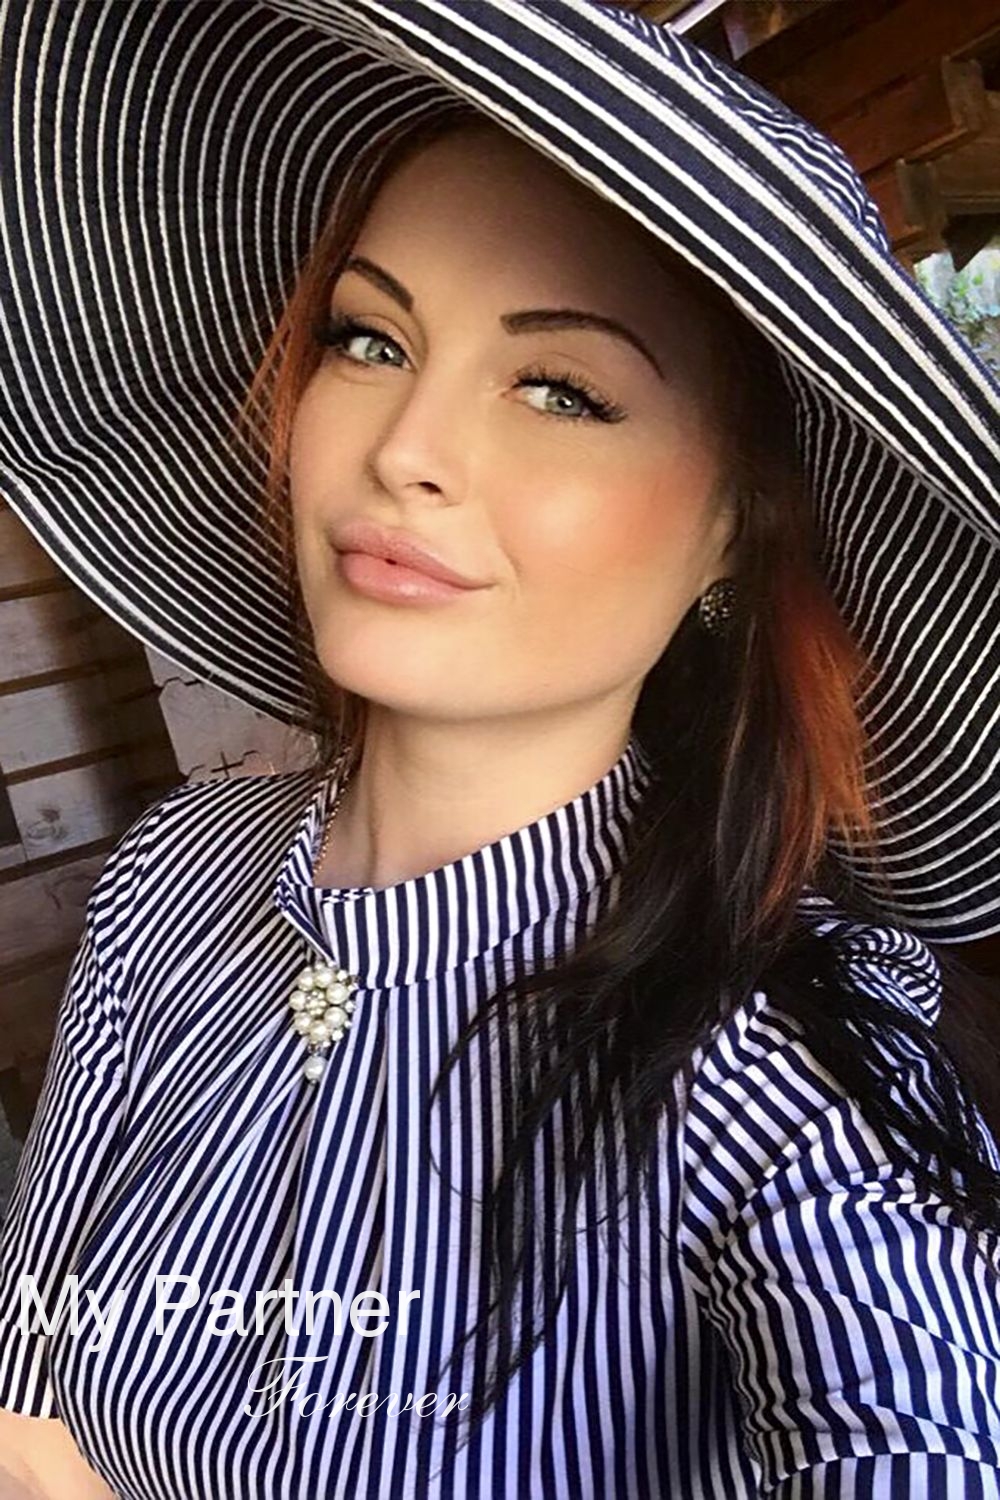 Datingsite to Meet Sexy Russian Girl Svetlana from Tallinn, Estonia